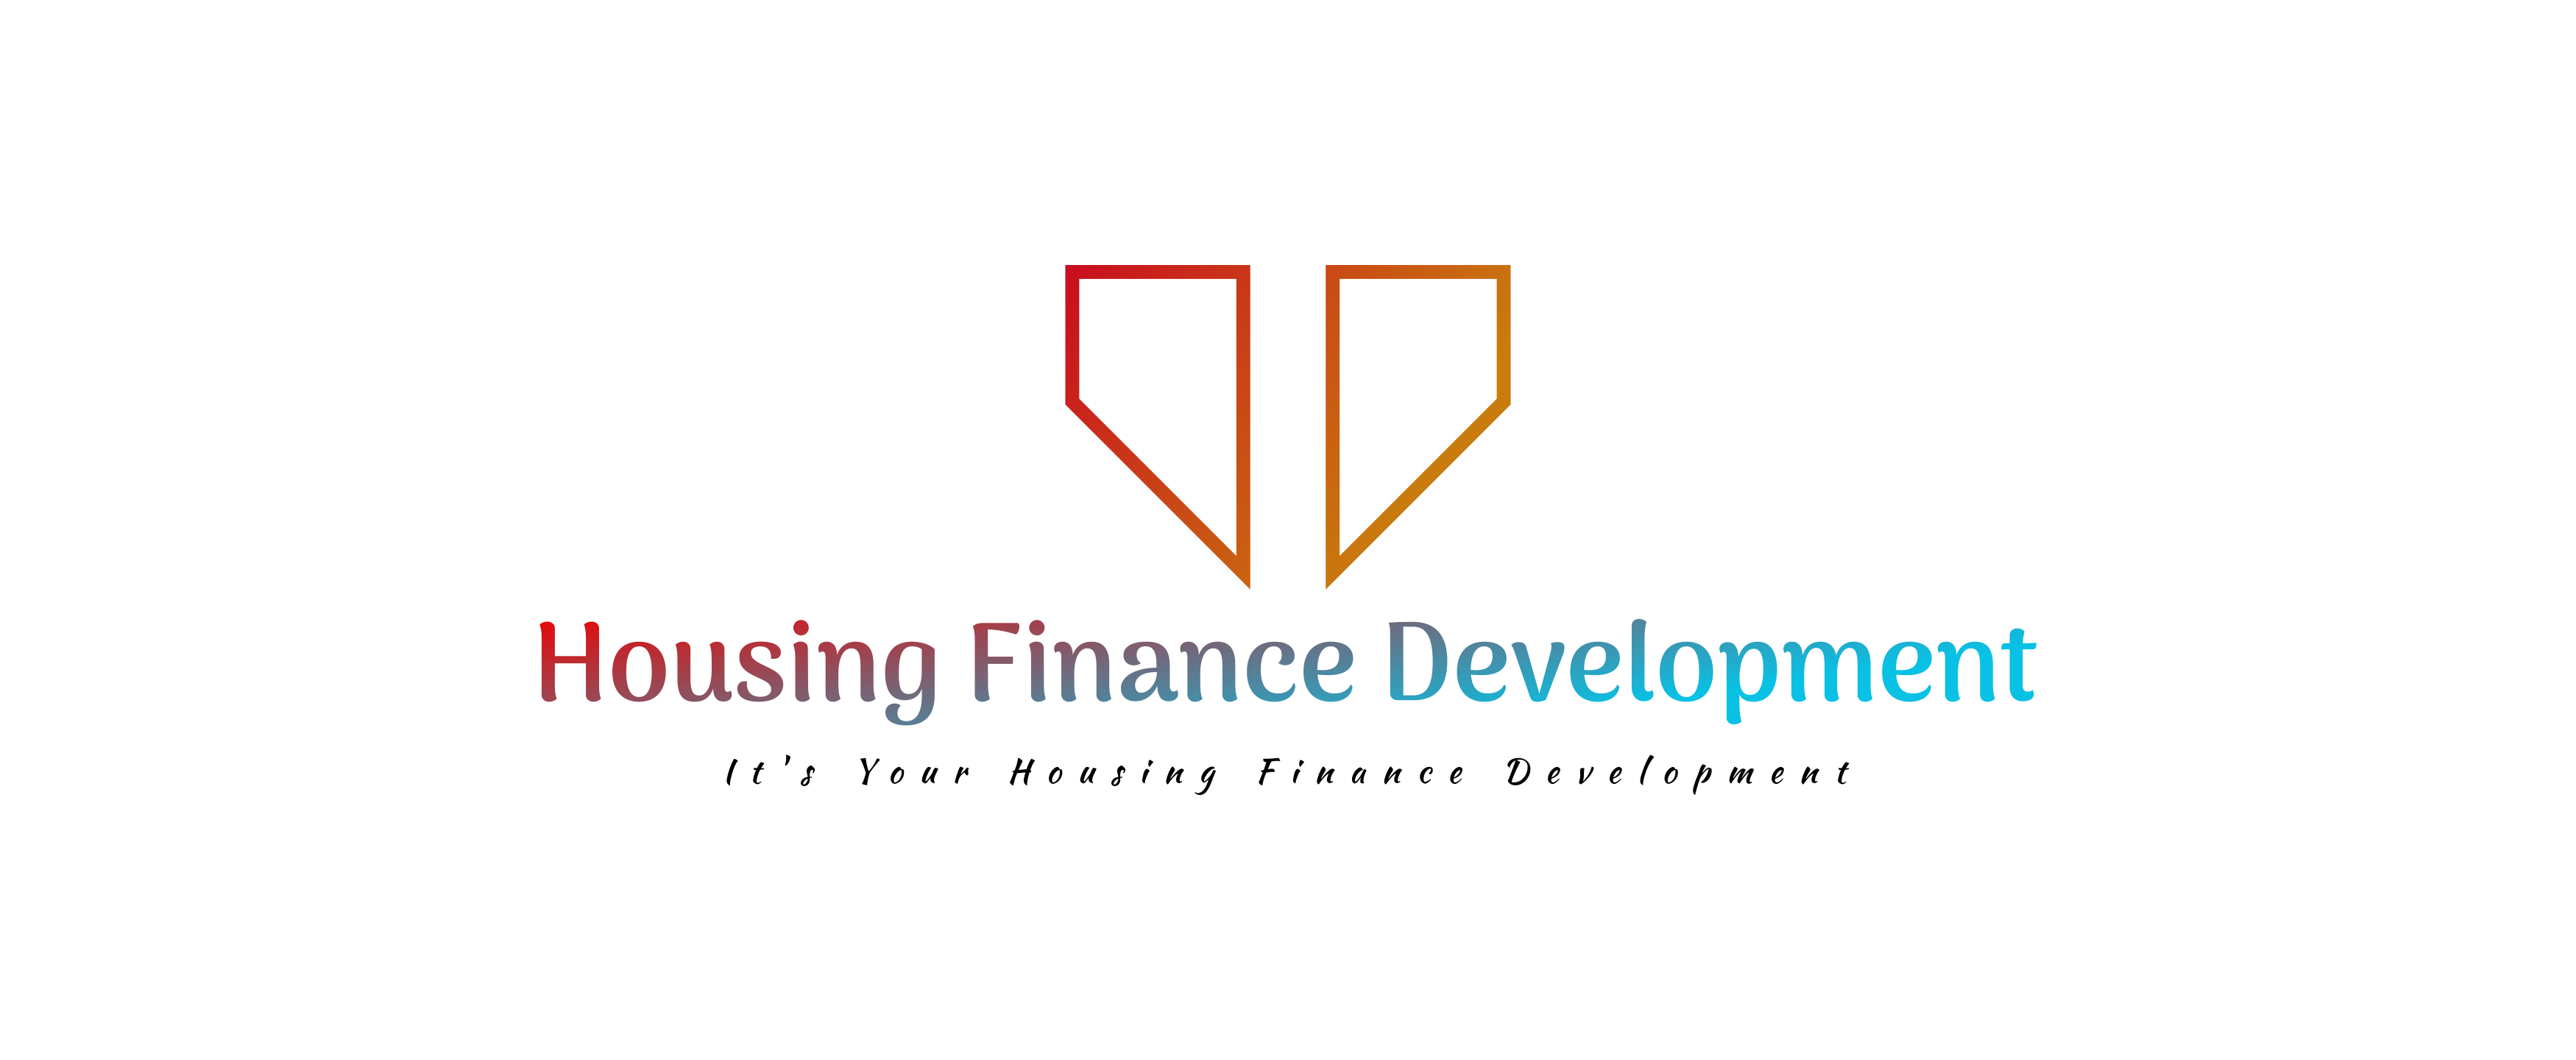 Housing Finance Development